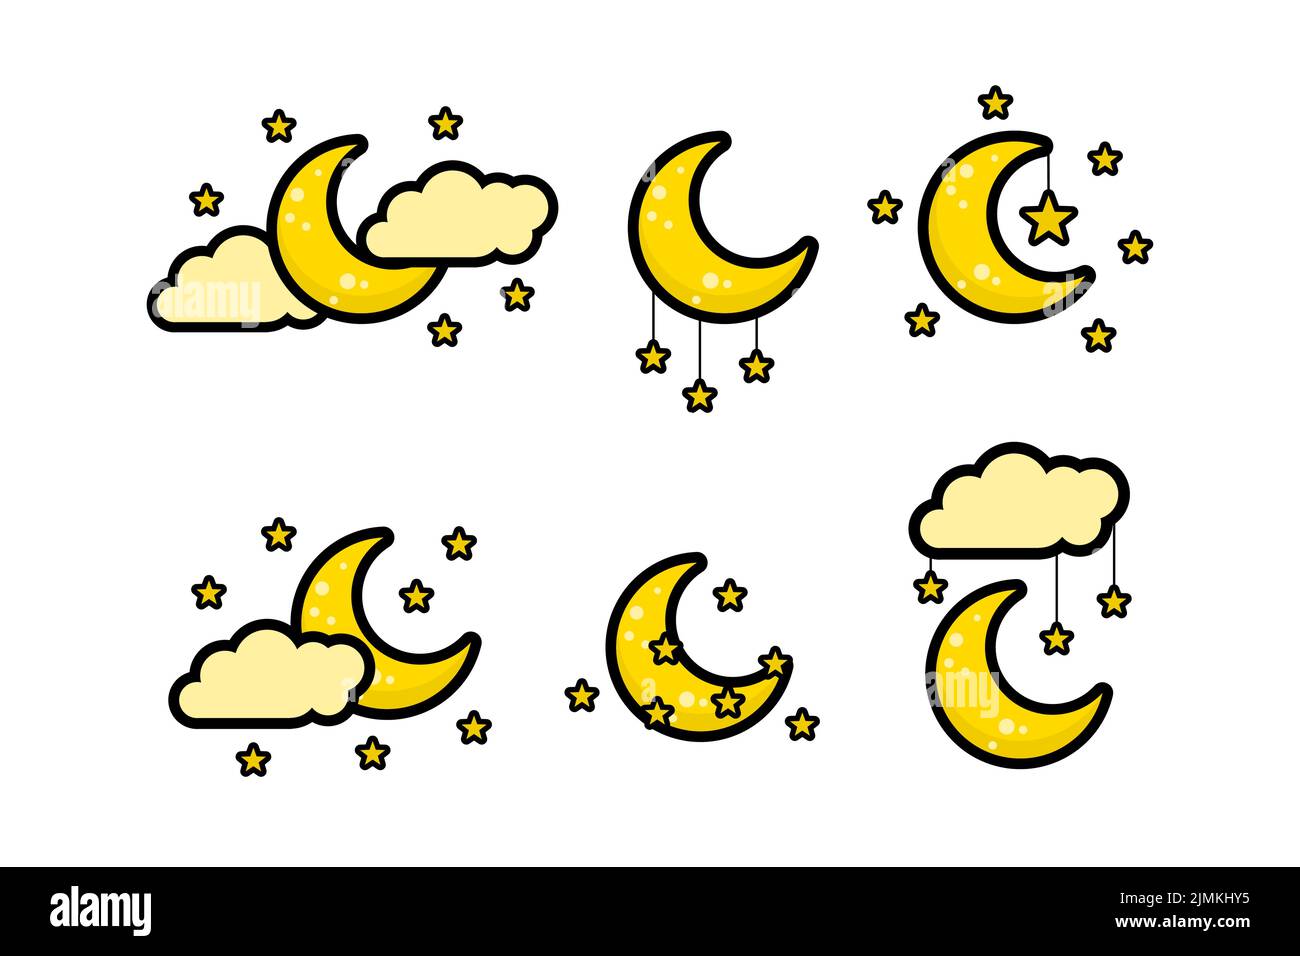 Crescent Moon, Stars and Clouds Collection Bundle Vector Illustrazione Vettoriale